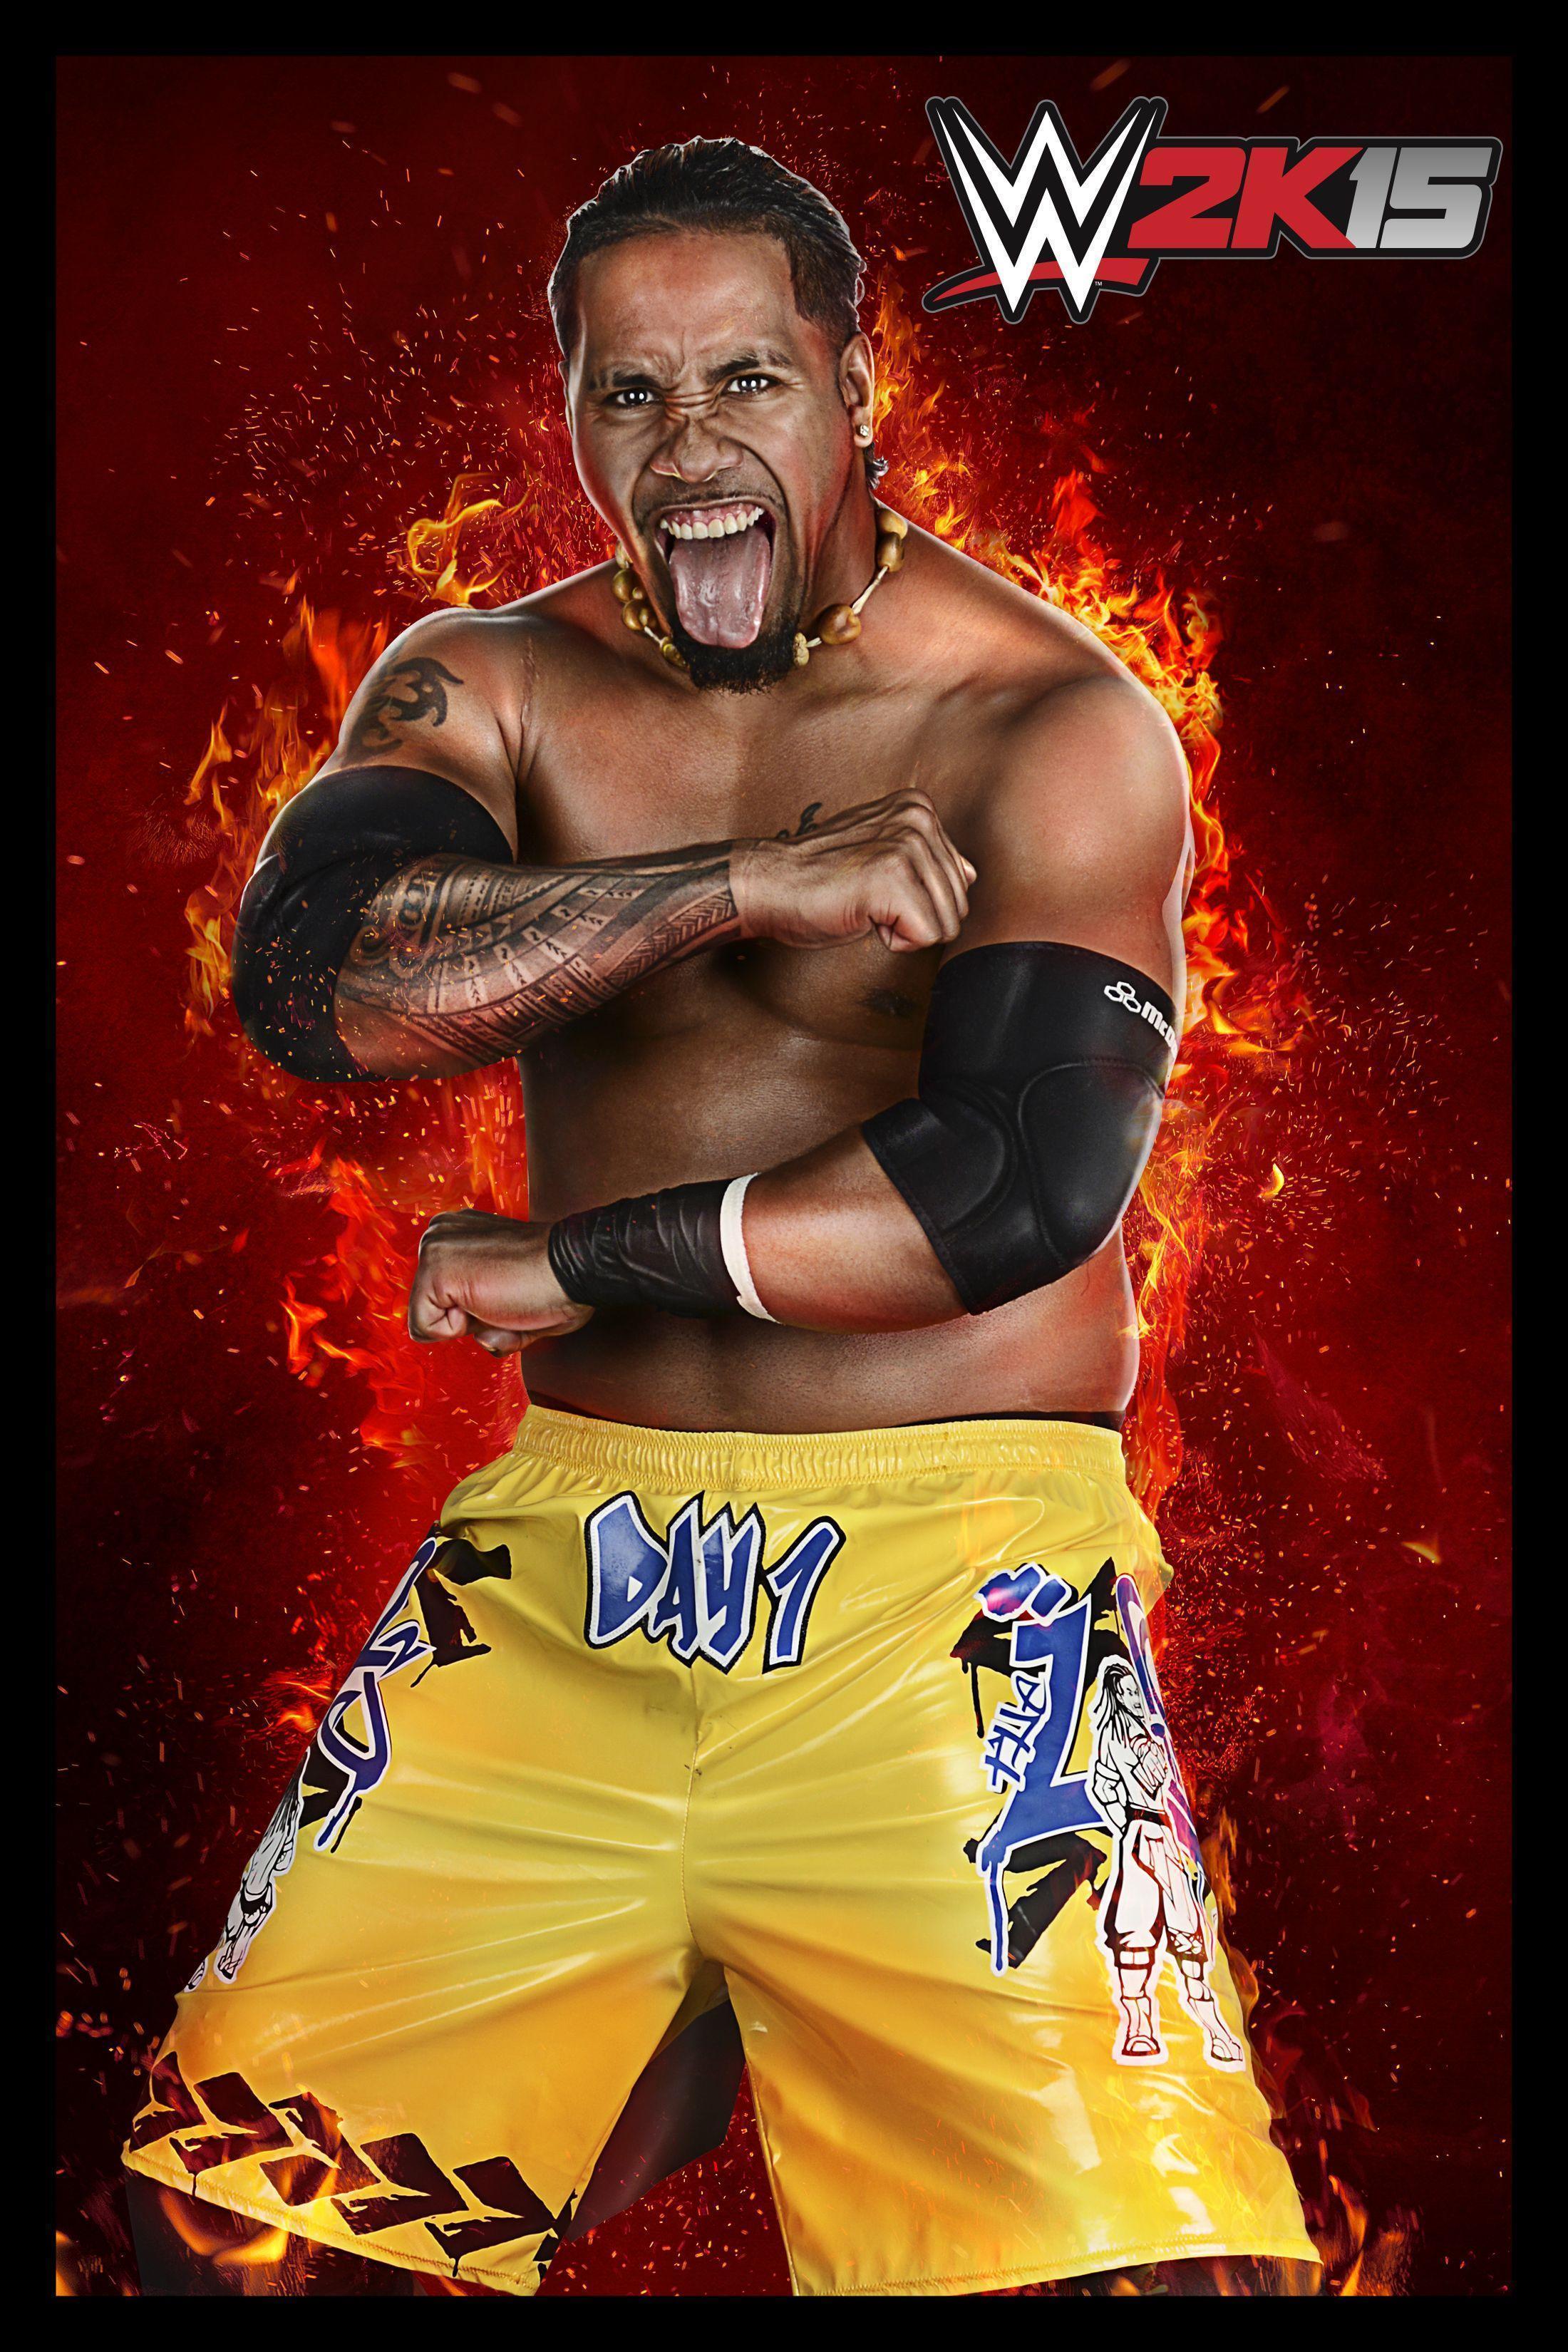 WZ Photo Gallery: Brand New WWE 2k15 Roster Image feat. Daniel